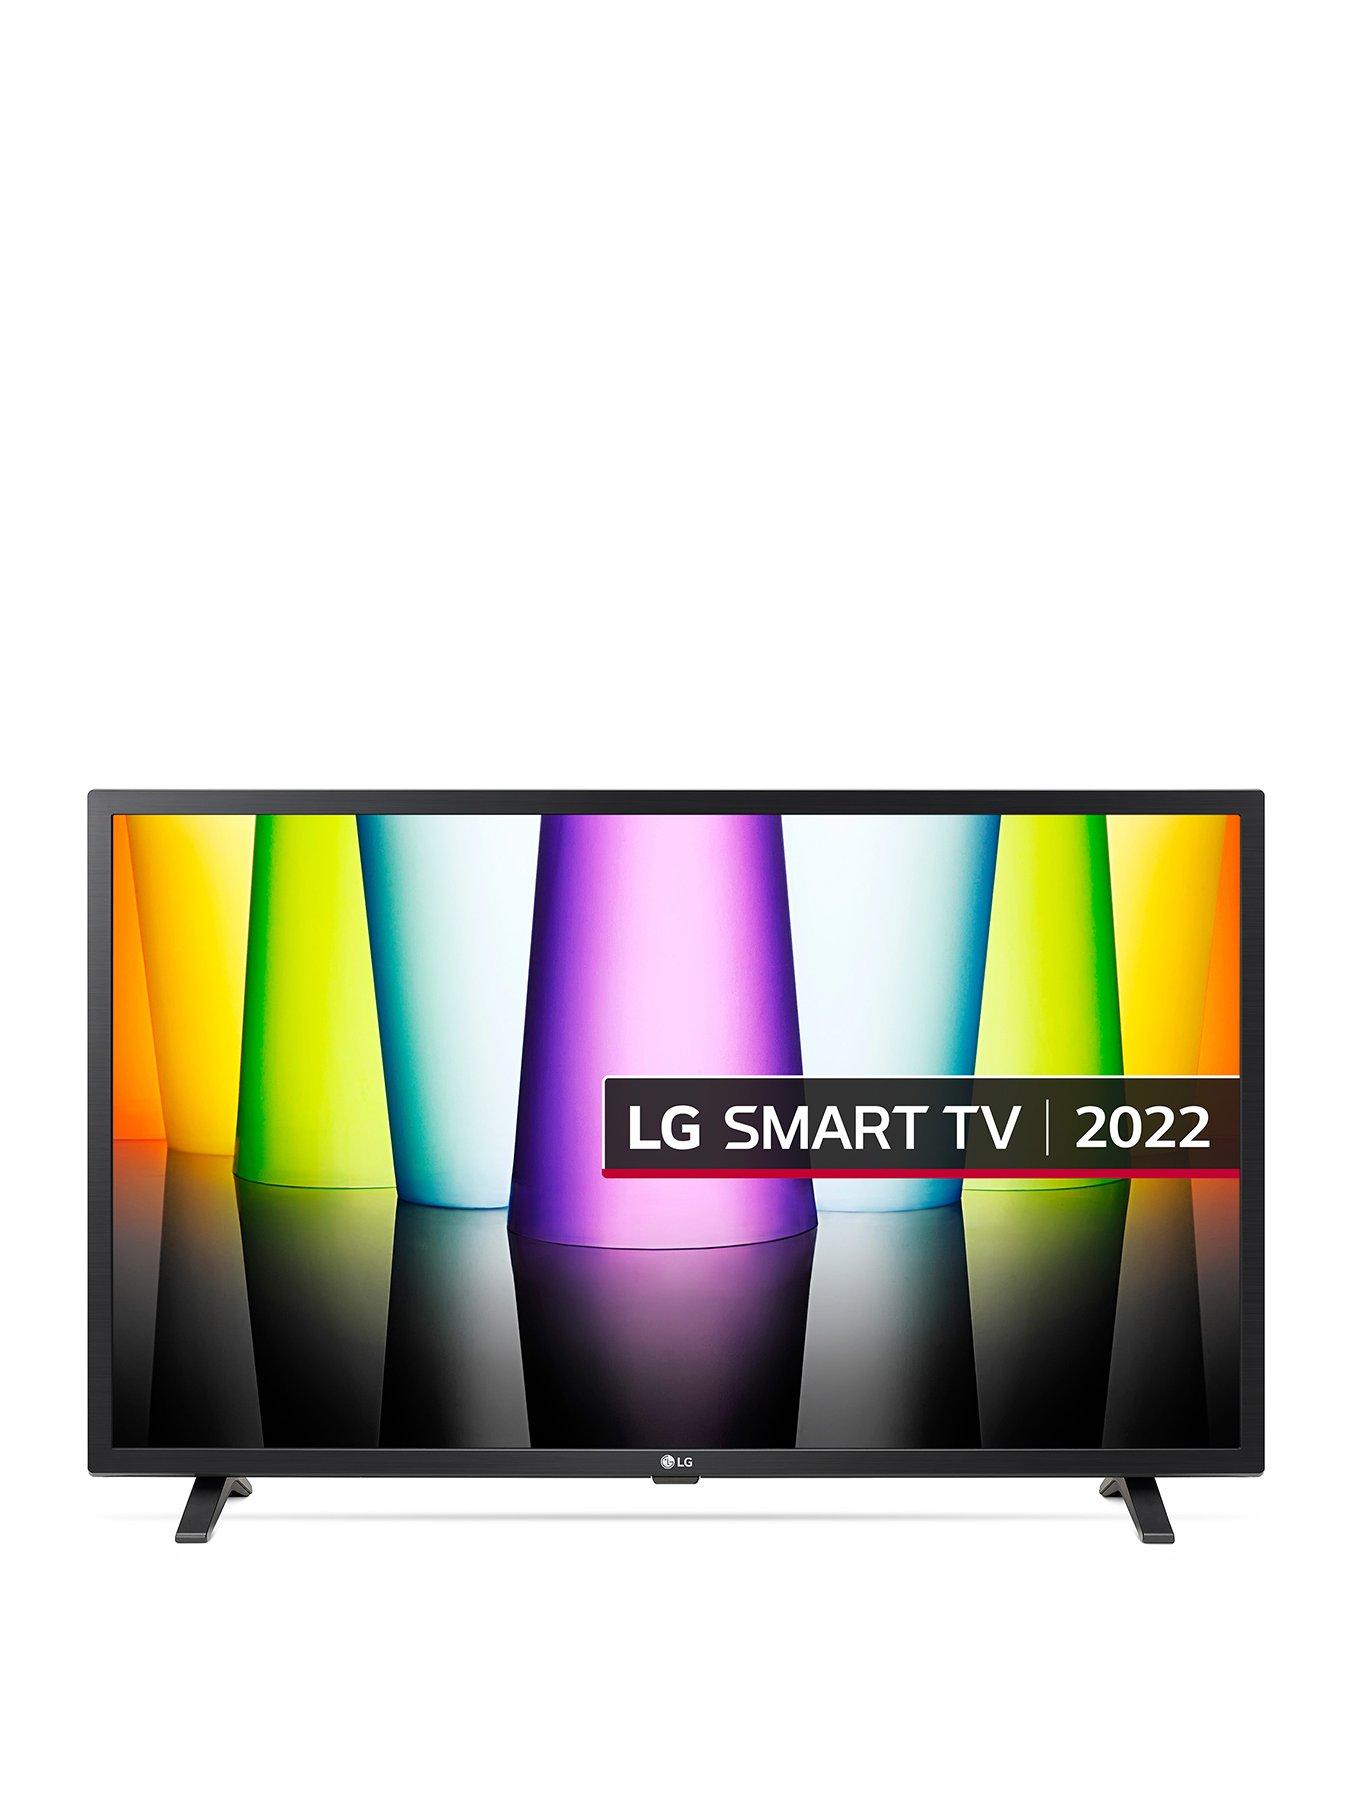 LG 32-inch (80 cm), Full HD (1920 x 1080) TV Monitor, Inbuilt